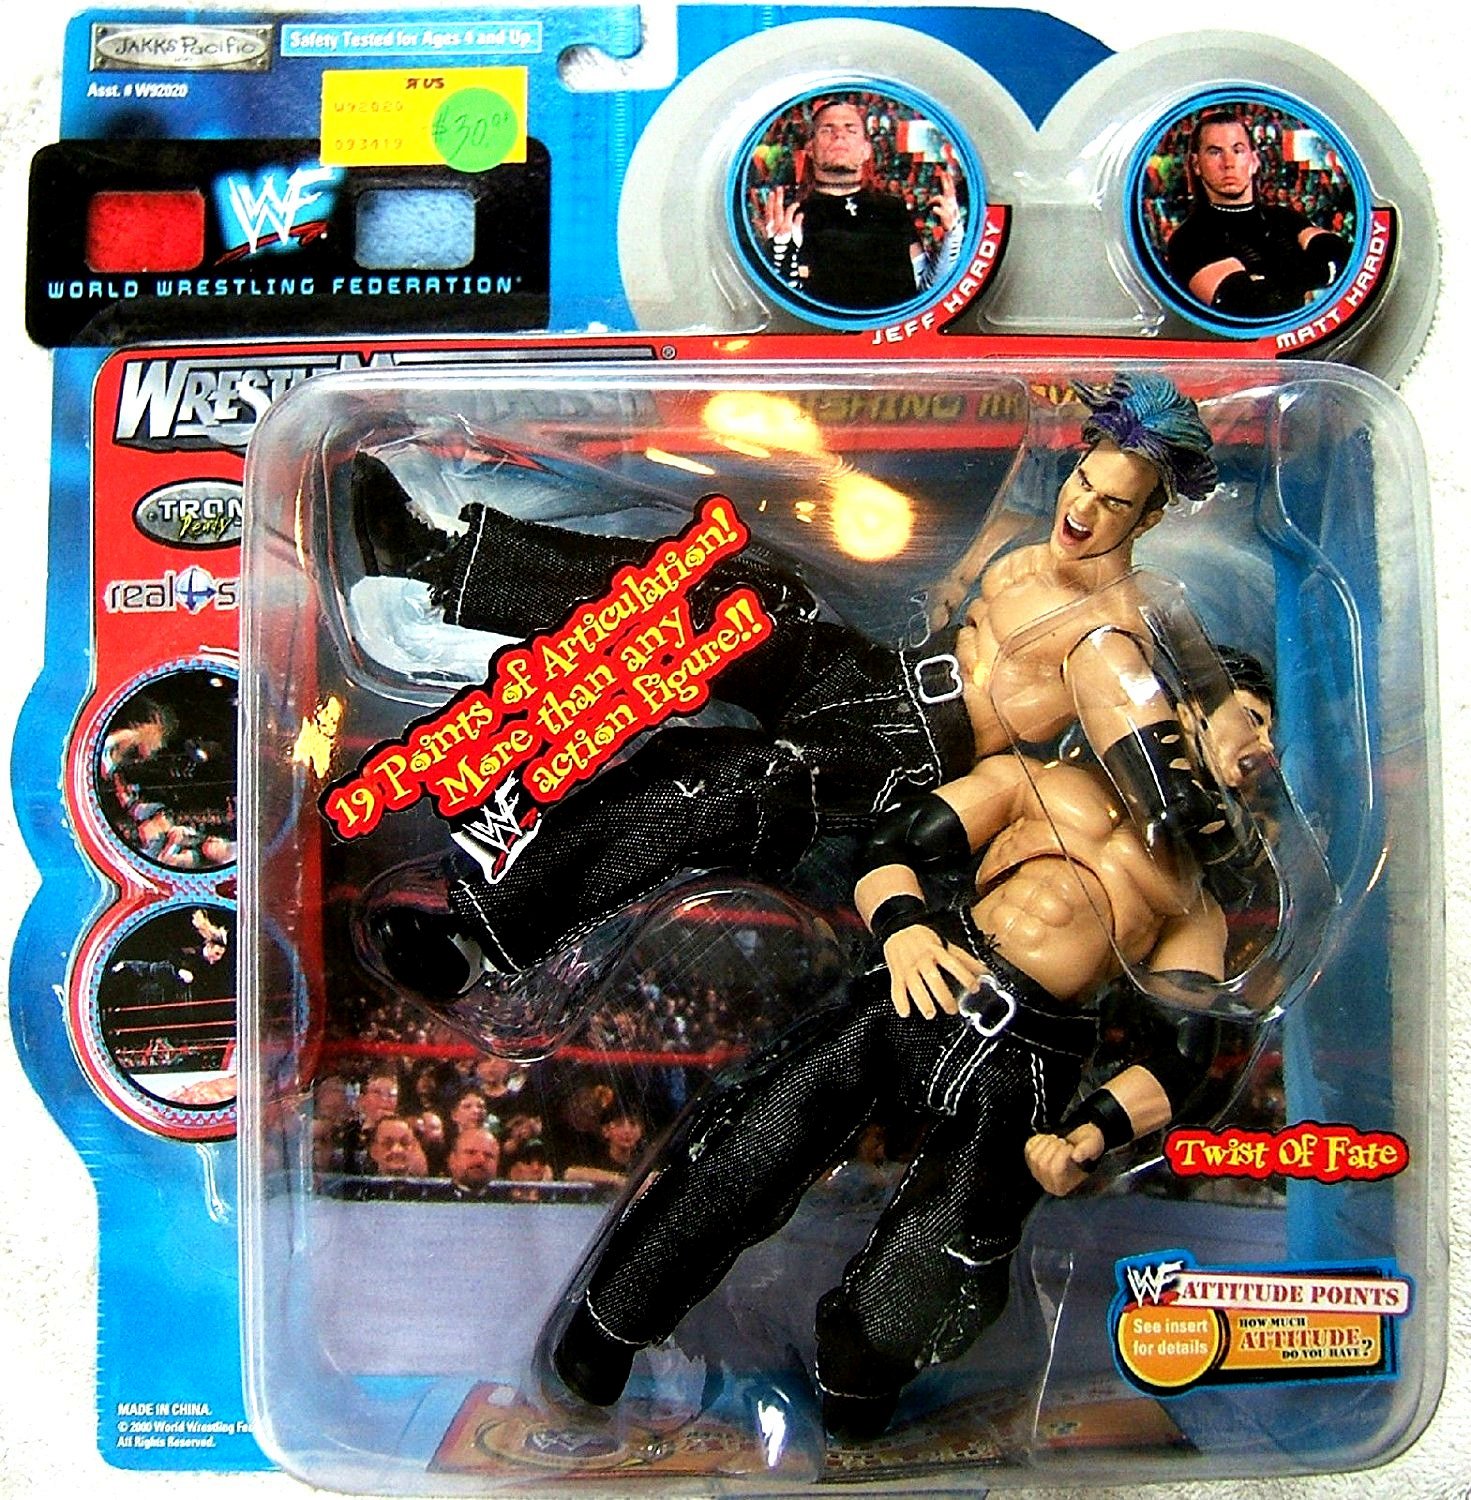 WWF WWE WWF WRESTLEMANIA 1 OFFICIAL  SCALE RING 2005 JAKKS PACIFIC ORIGINAL BOX SET 